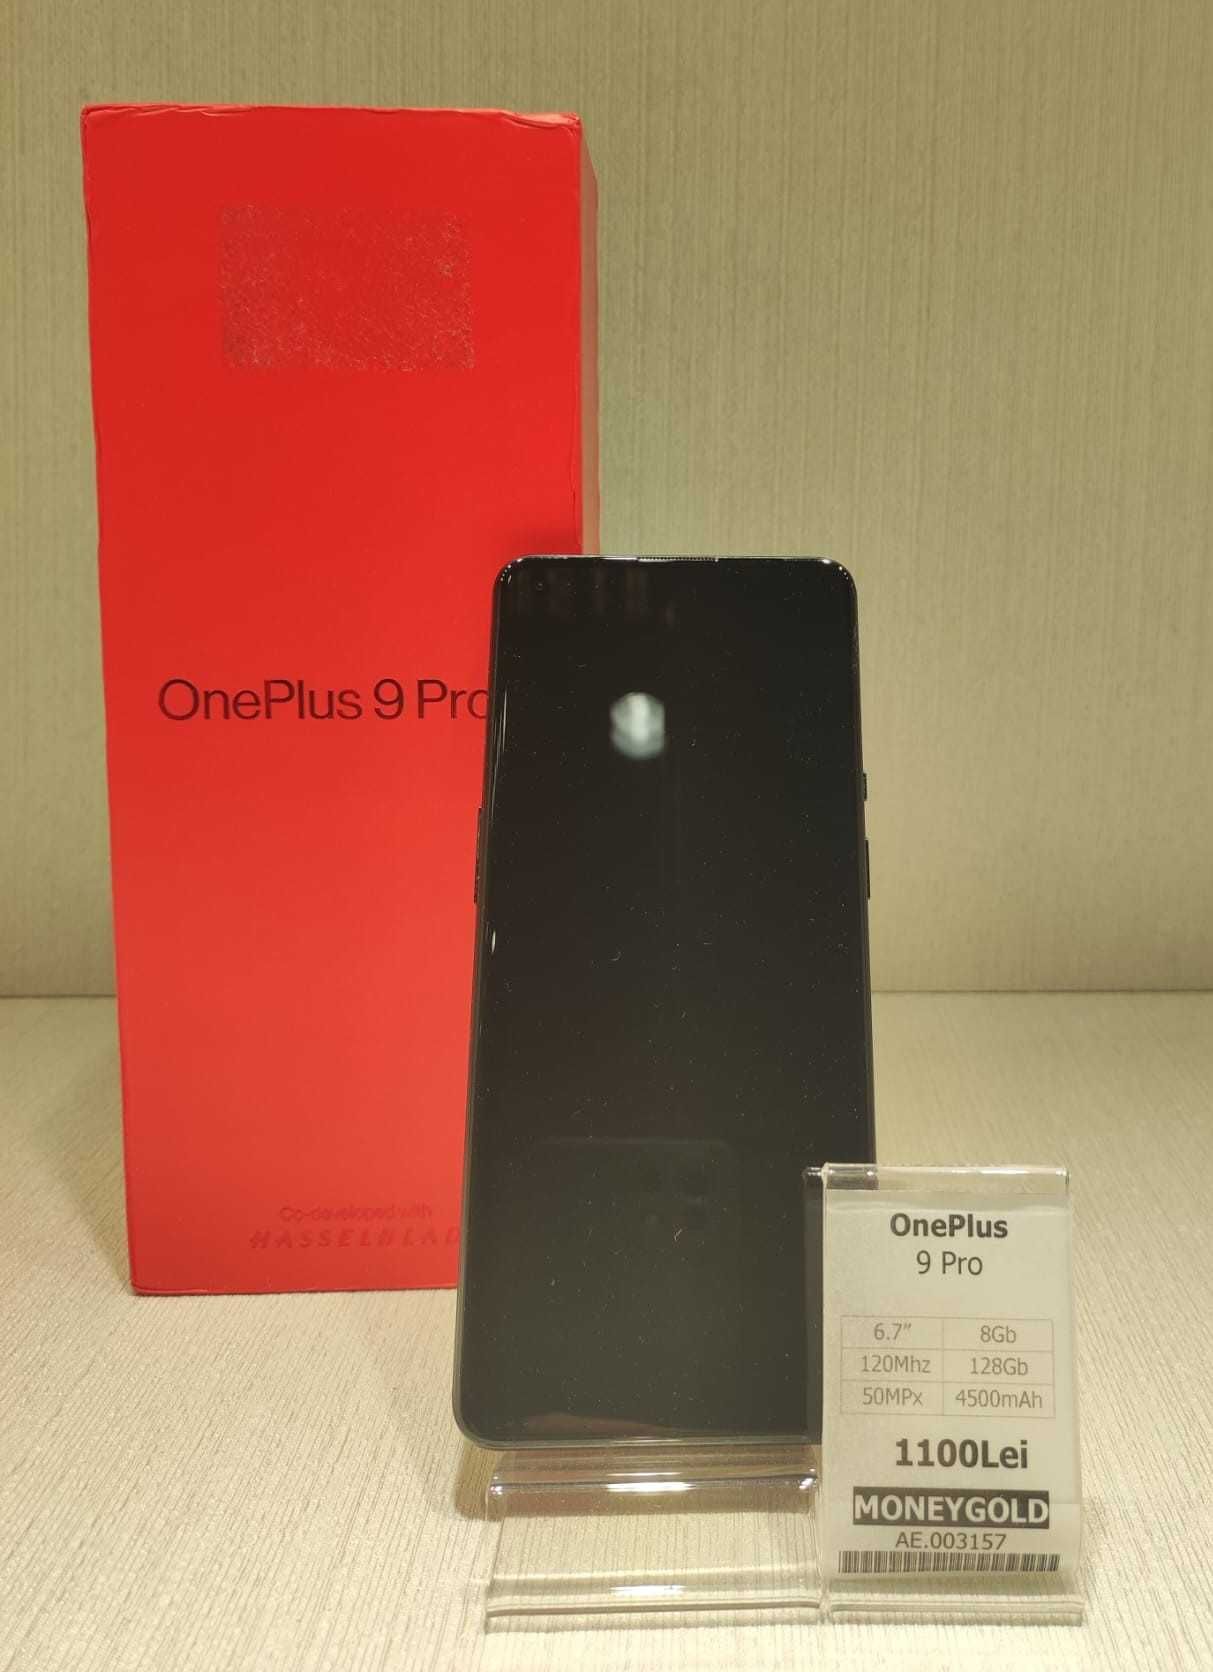 Telefon OnePlus 9 Pro MoneyGold AE.003157